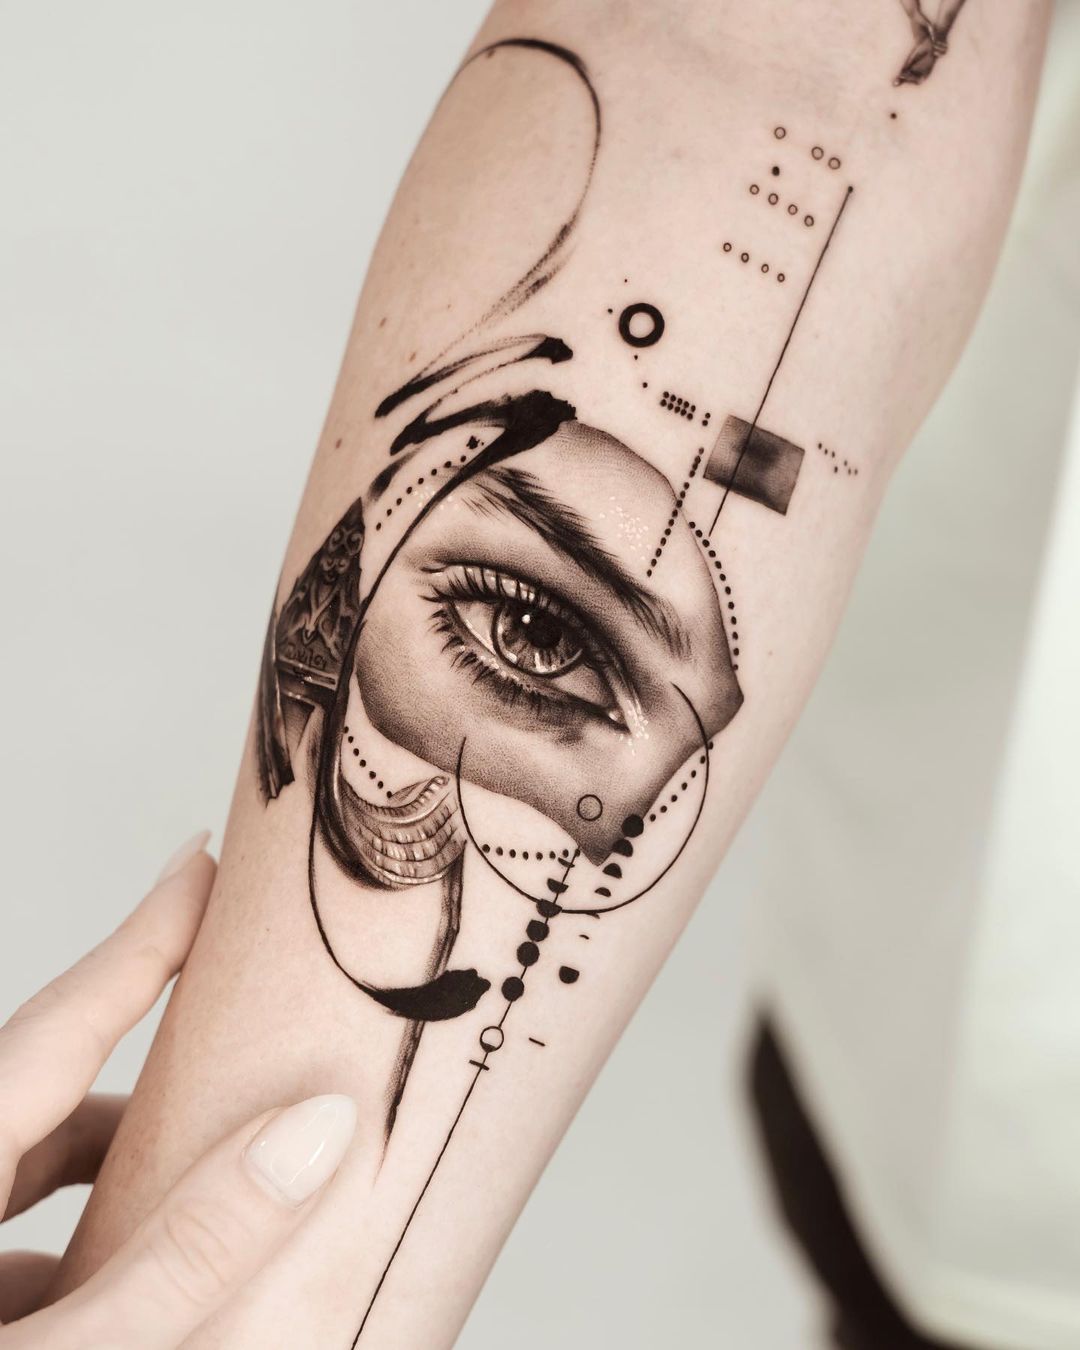 Amazing blackwork tattoo on forearm by nhea.ttt